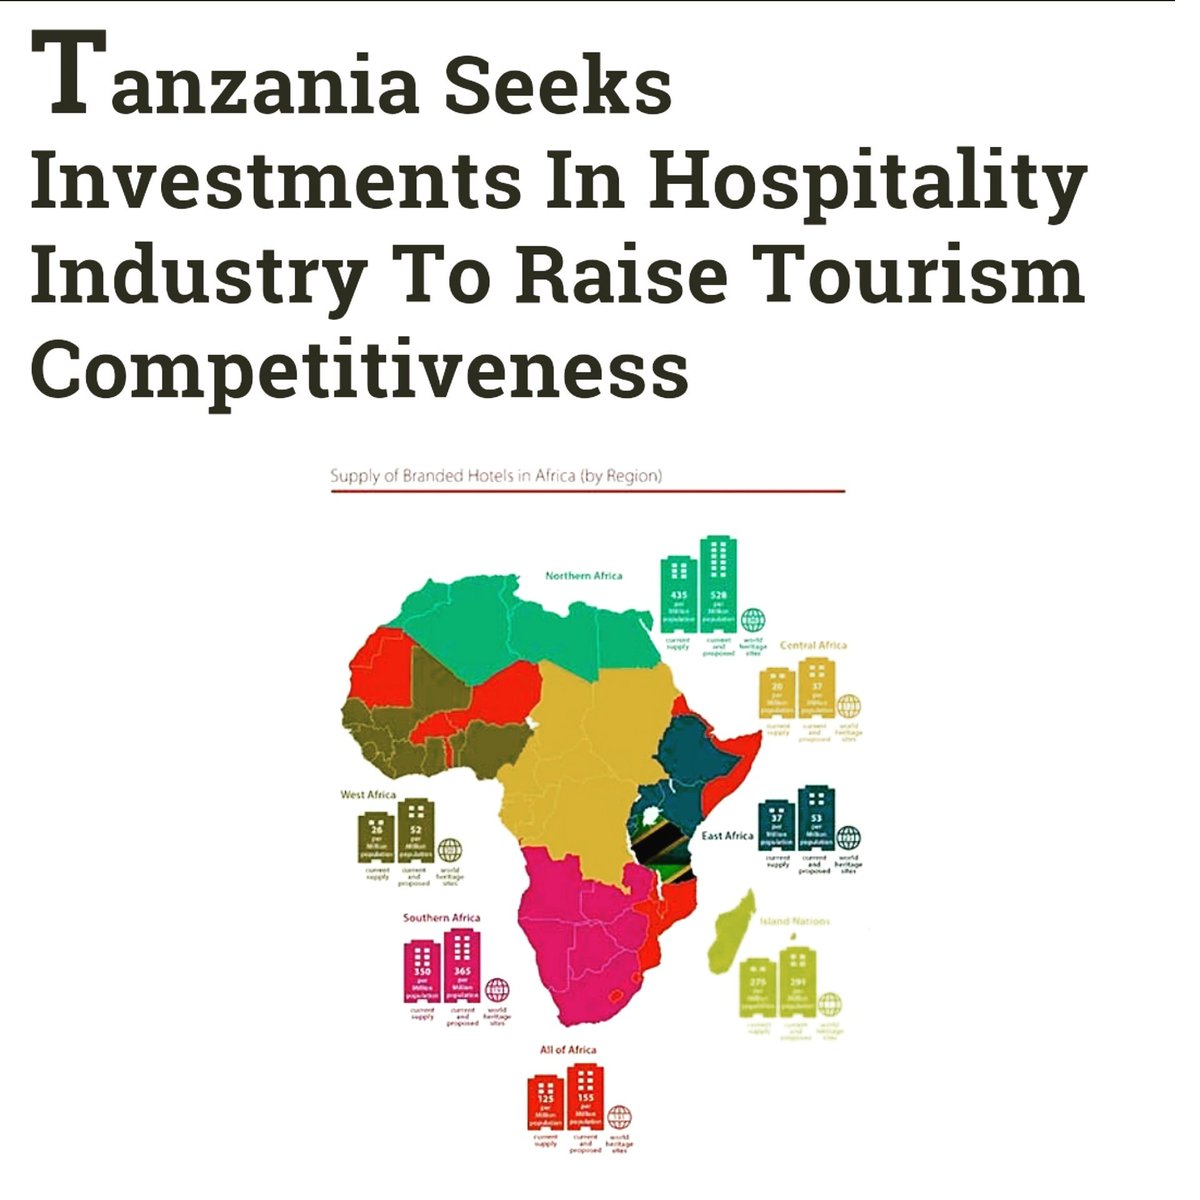 #Tanzania
#tanzaniainvestment 
#hospitalityindustry
#Tourism  @TanzaniaInvest that's very interesting